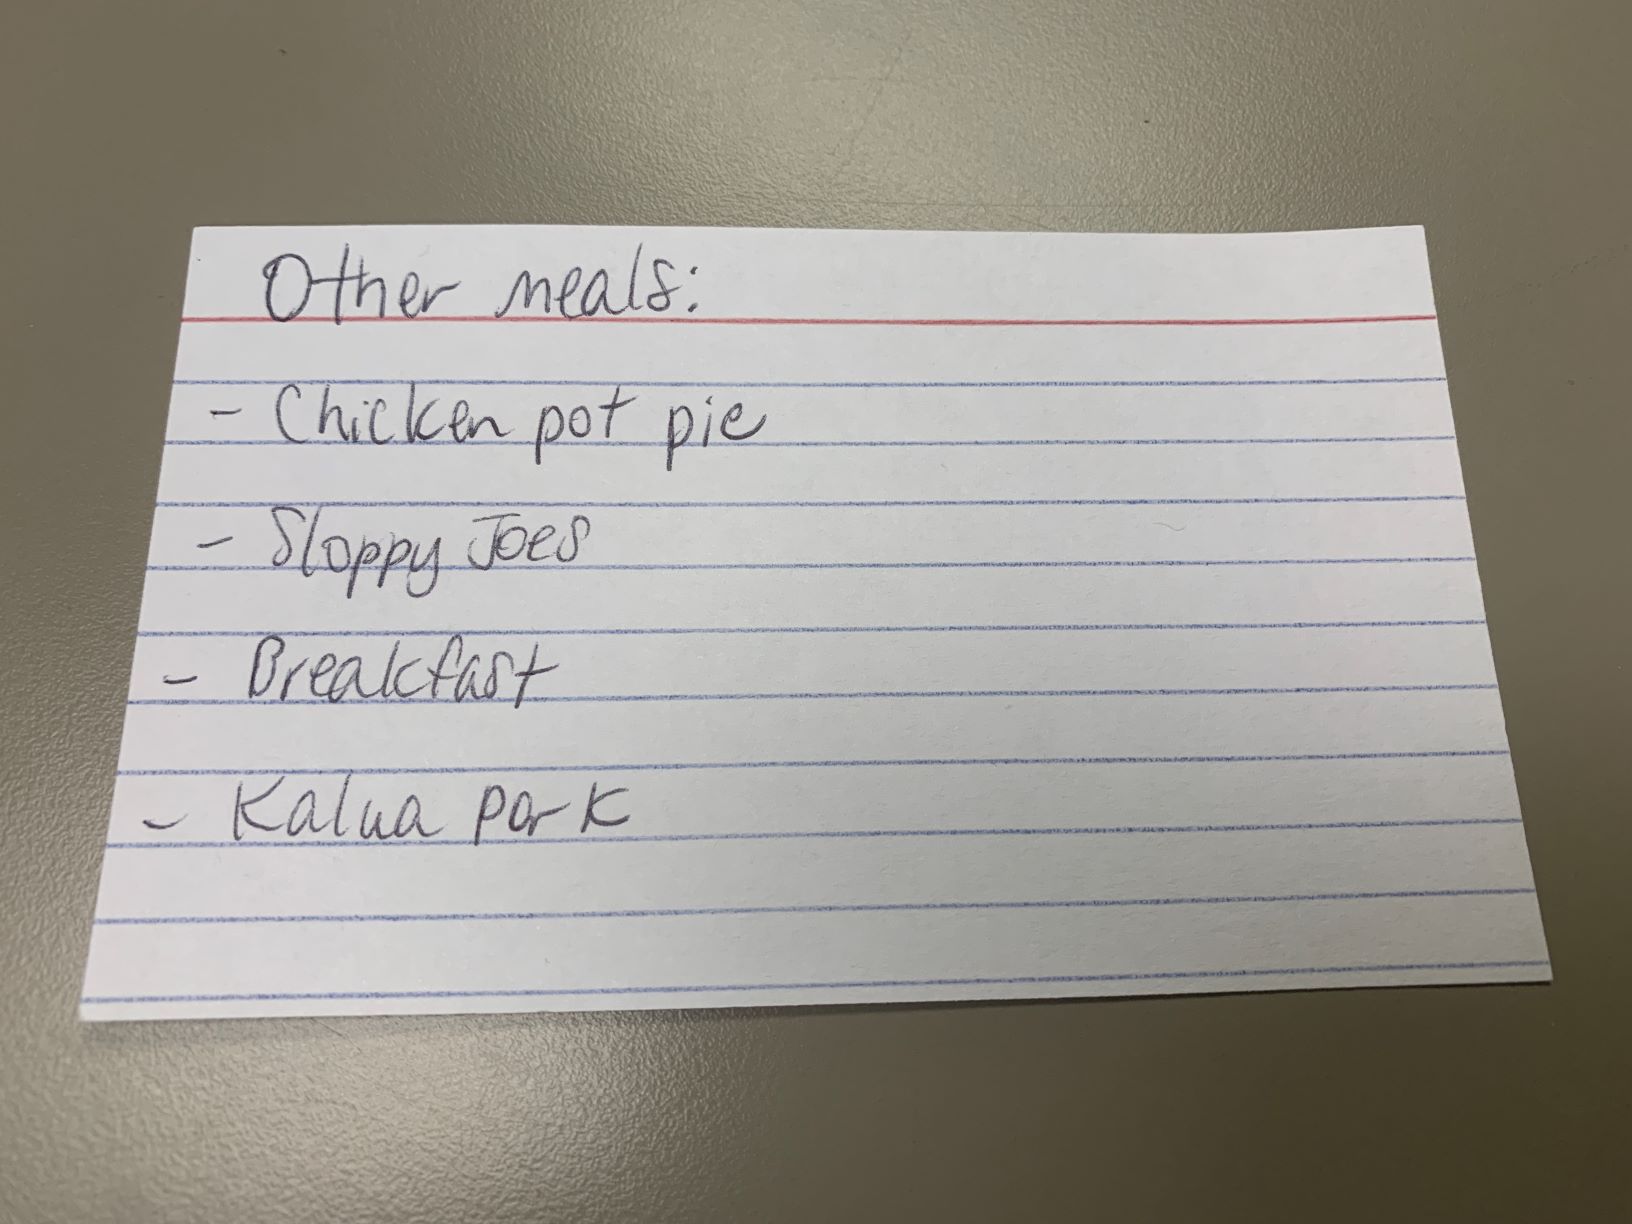 index card with Other Meals: Chicken pot pie, sloppy joes, breakfast, Kalua pork written on it.